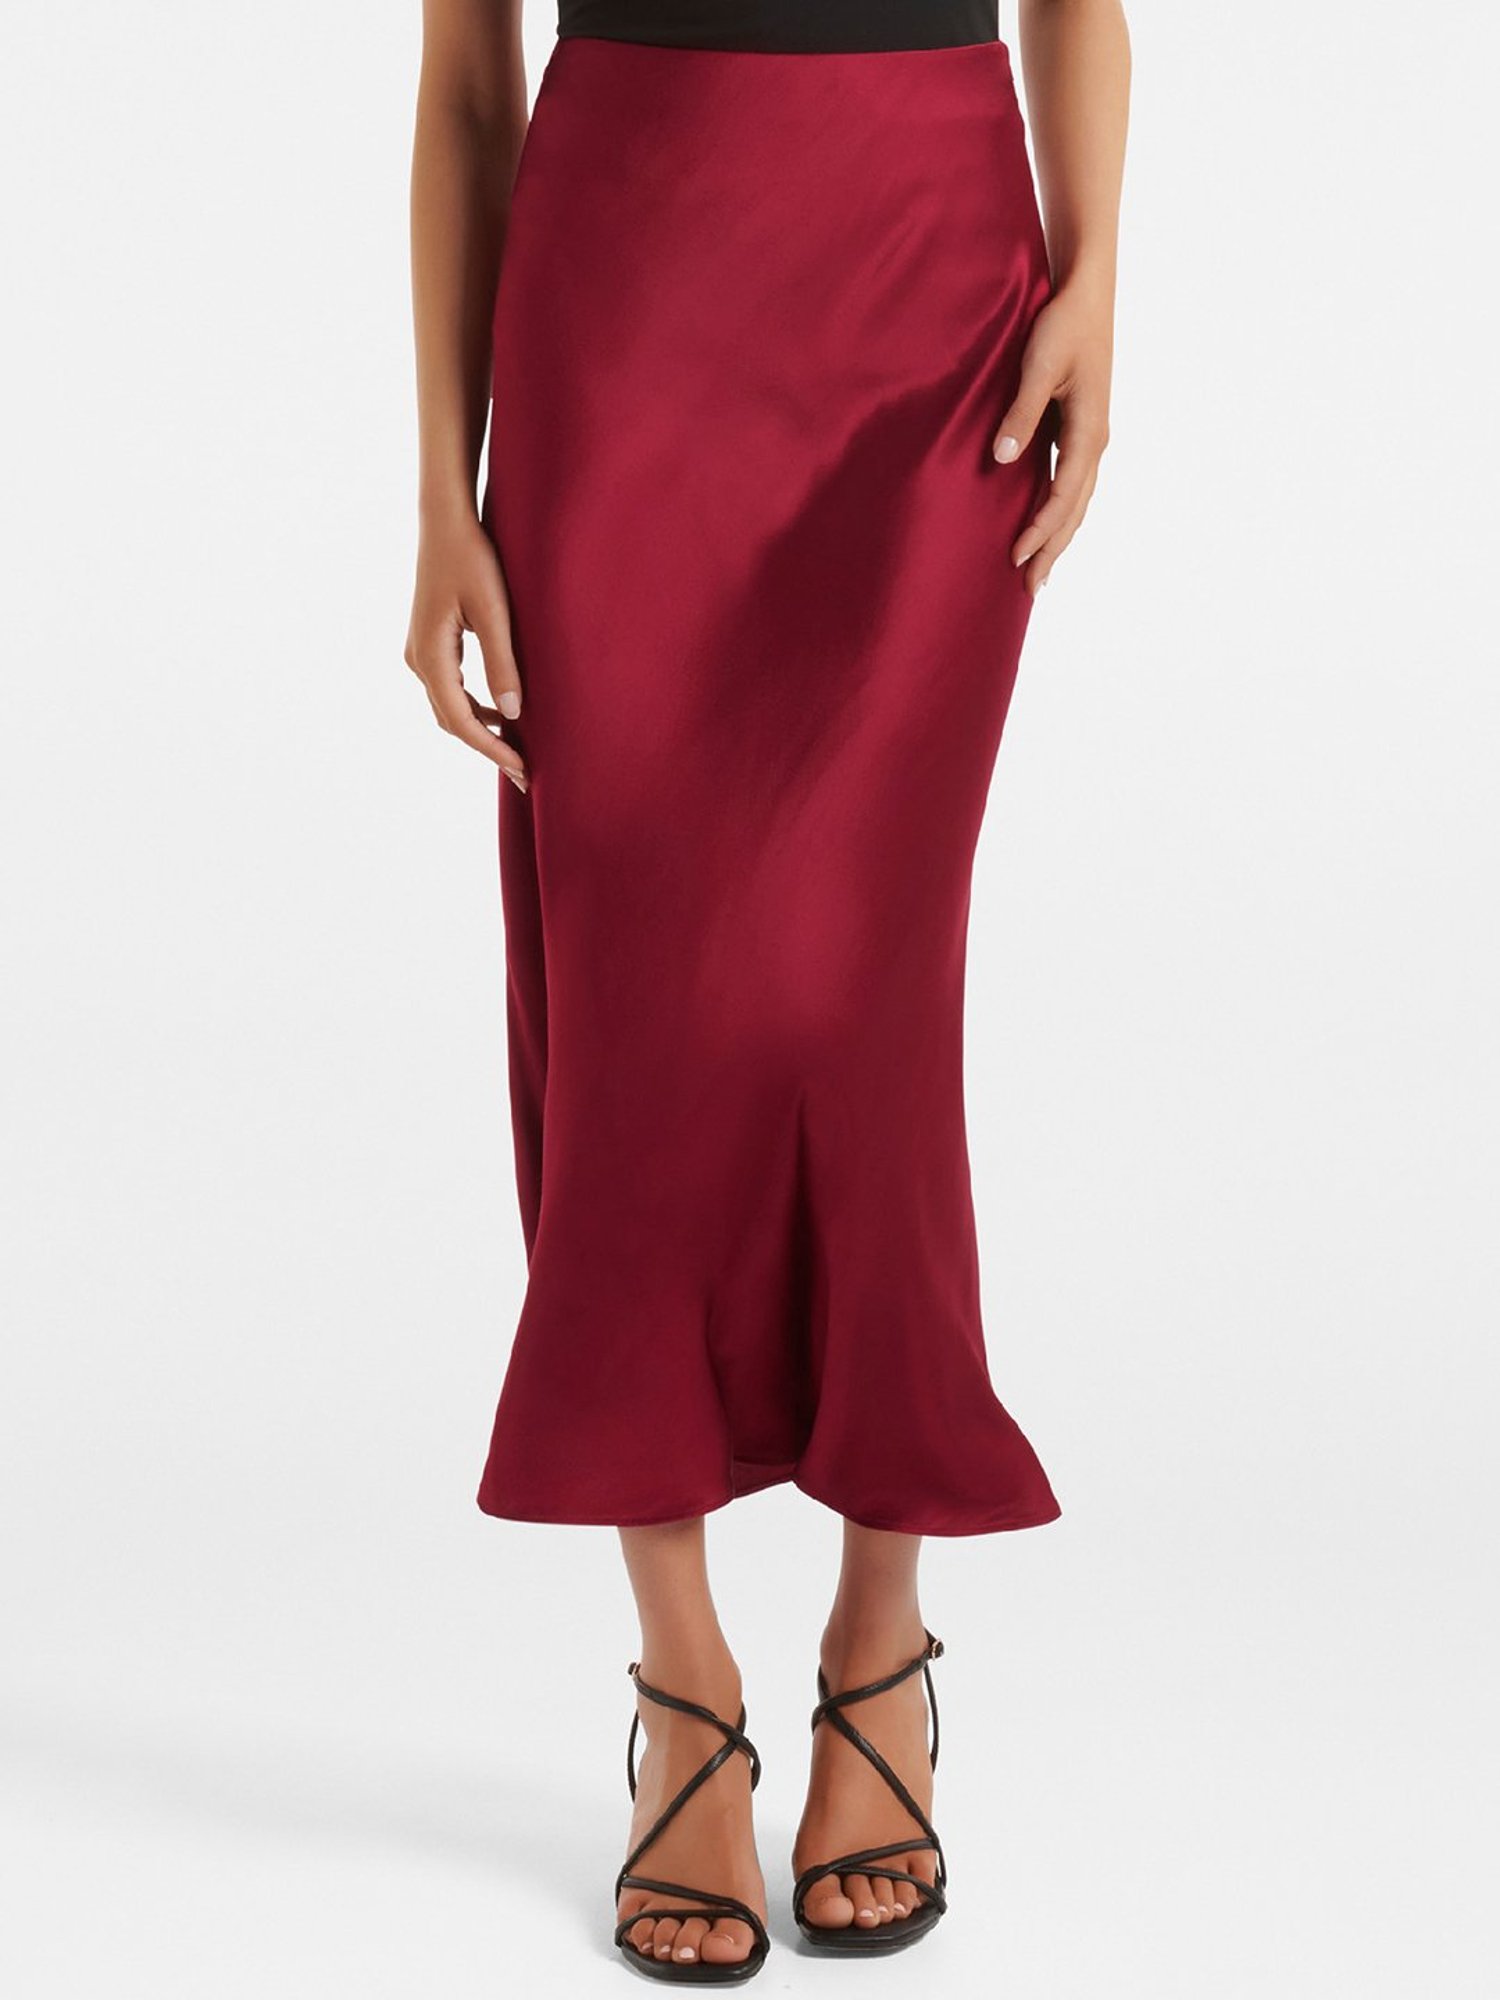 The Sarena Burgundy Skirt | Long Satin Skirt by Folkster